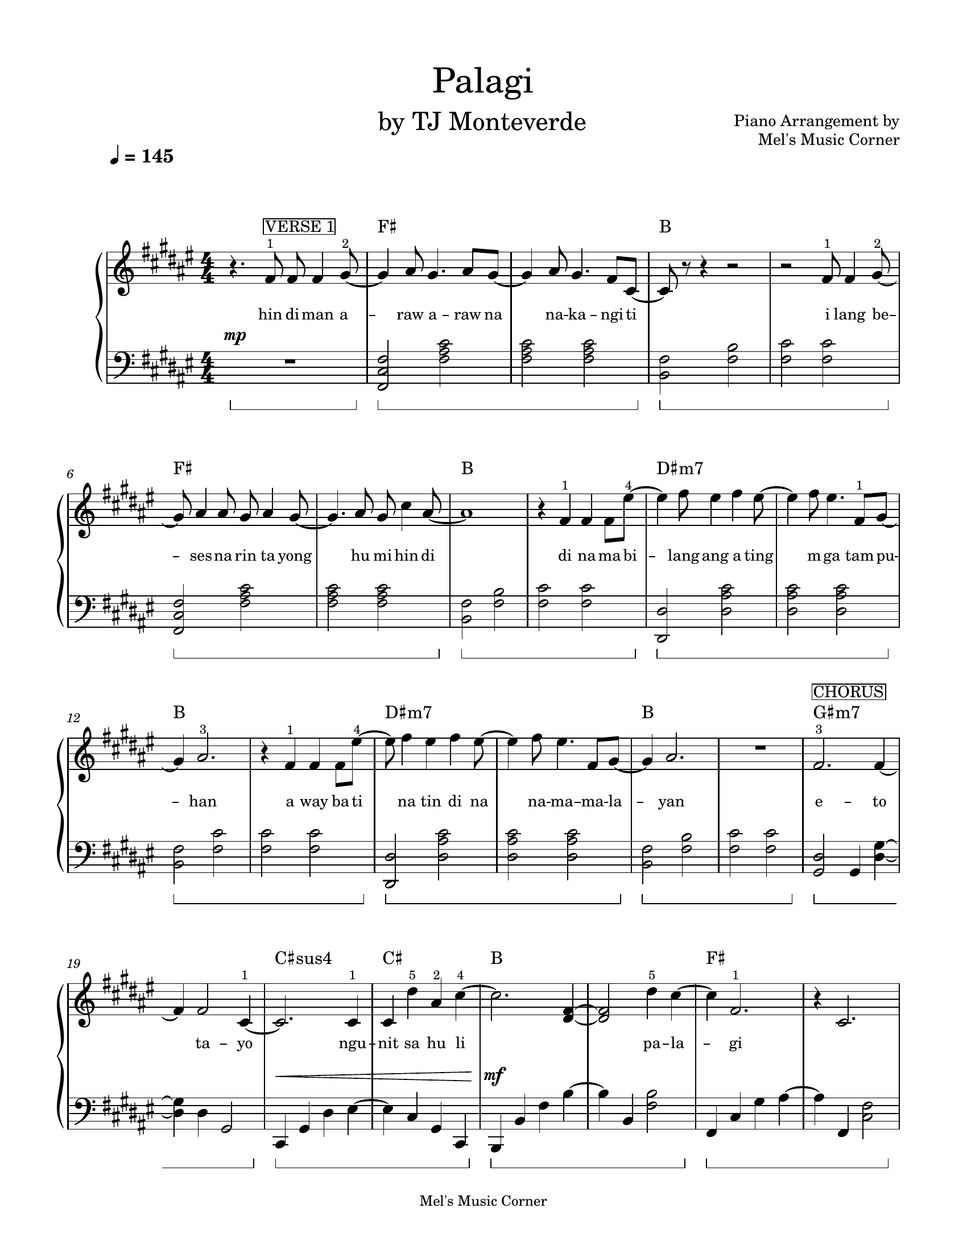 TJ Monteverde - Palagi (piano sheet music) by Mel's Music Corner